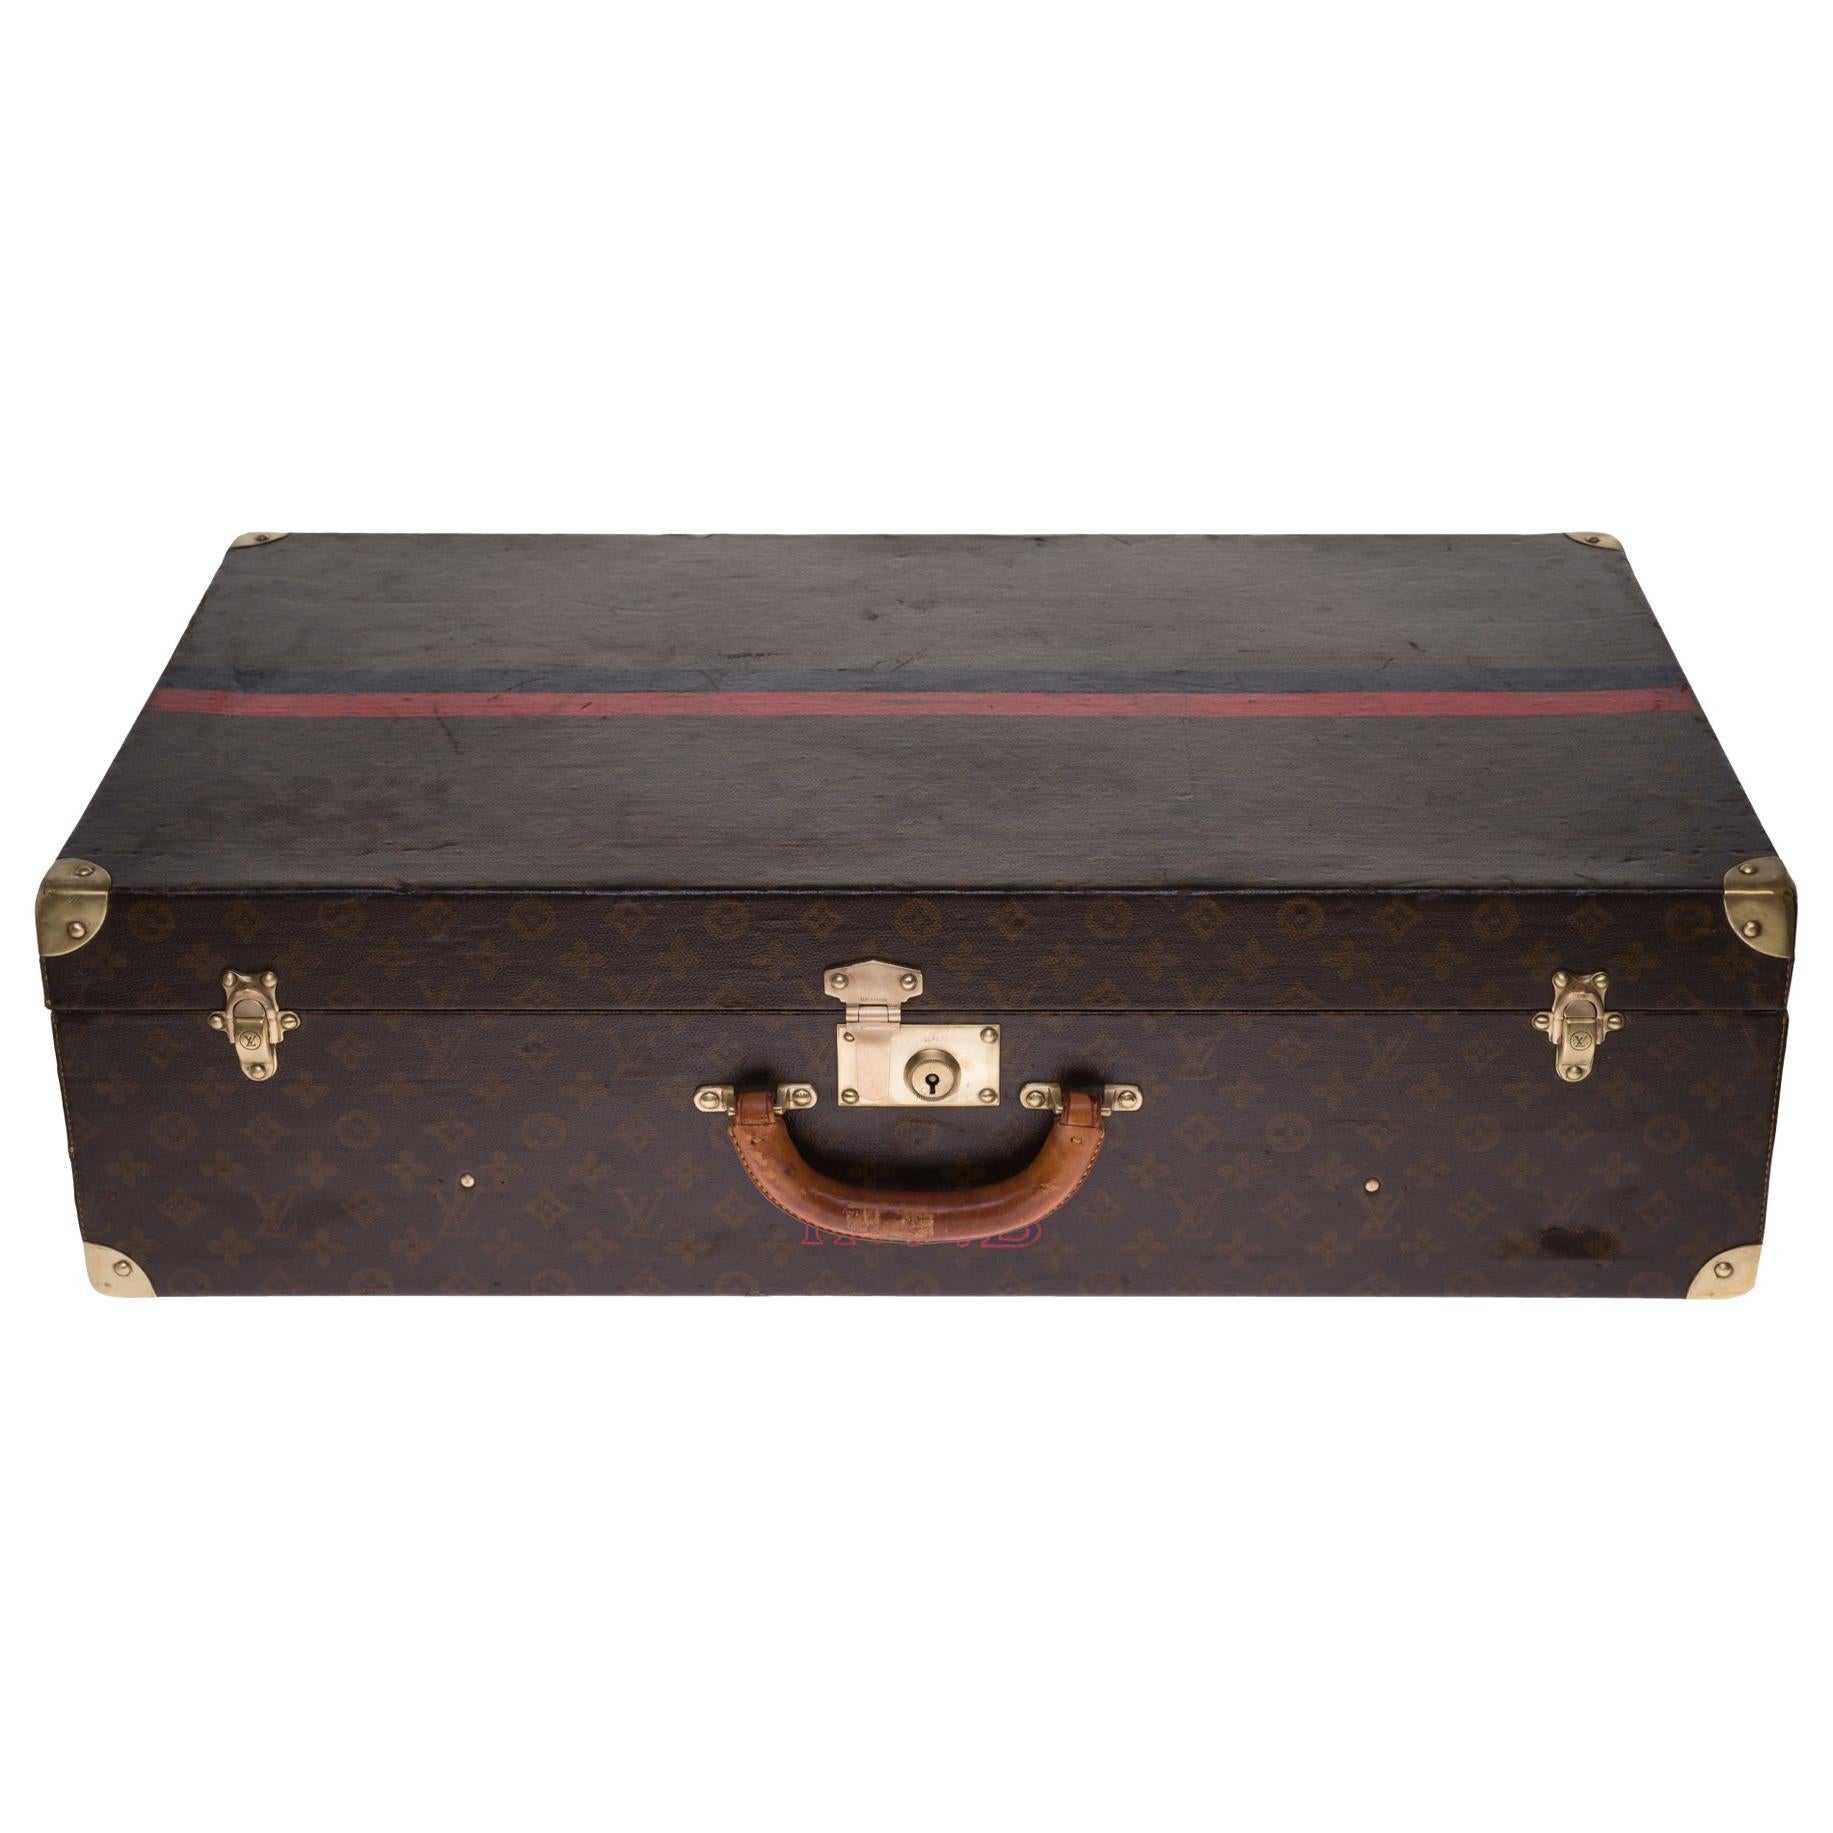 Rare Louis Vuitton 75 Suitcase in brown monogram canvas